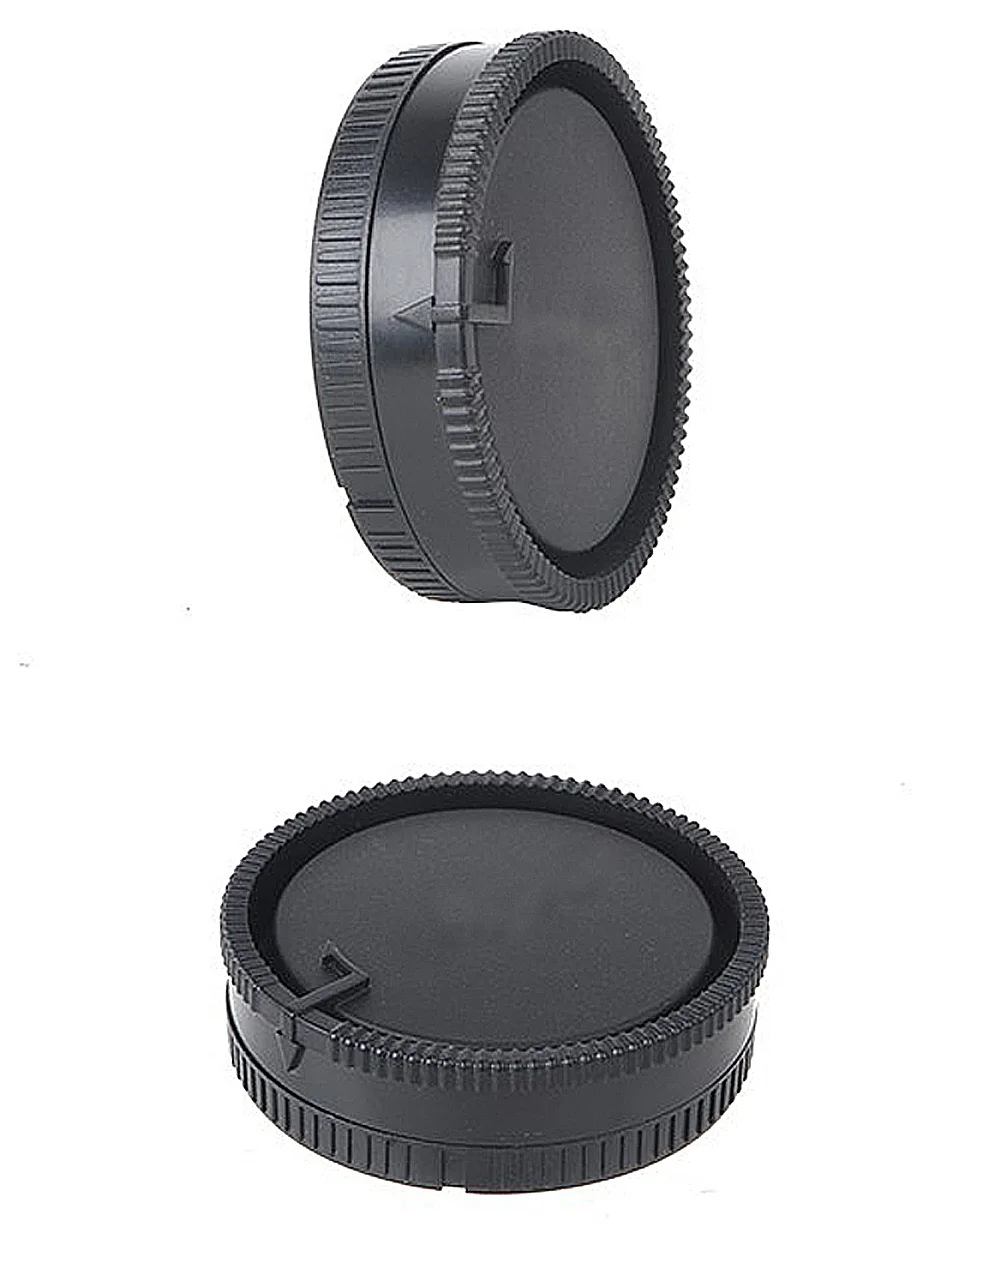 Крышка корпуса камеры+ Задняя крышка объектива Защитная крышка для камеры sony DSLR A290 A57 A390 A850 A99 A590 A77 камера